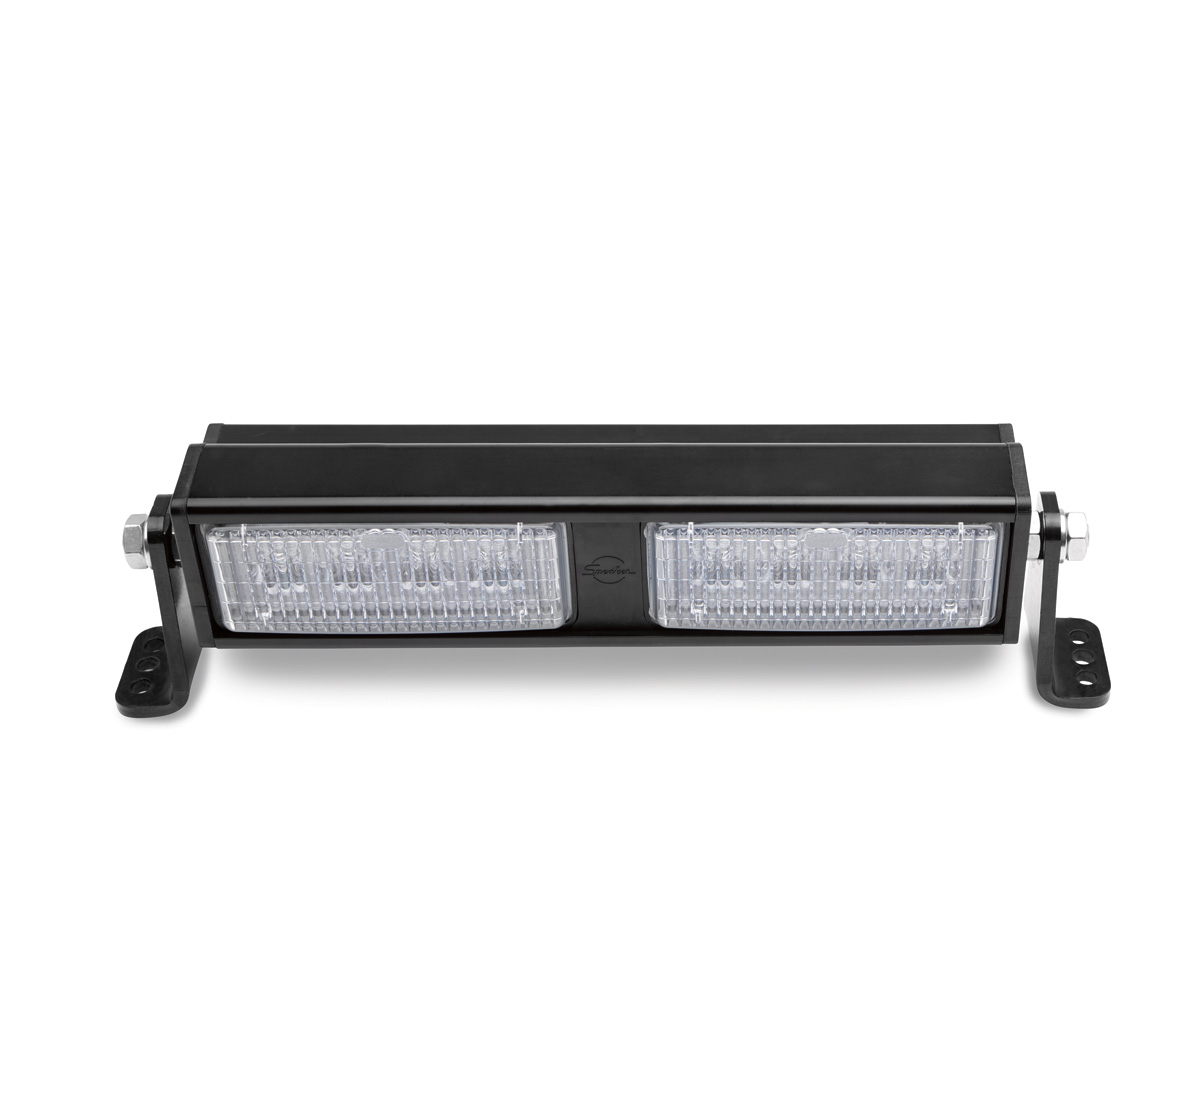 MULE PRO-FXT™ LED Light Bar | Kawasaki Motors Corp., U.S.A.